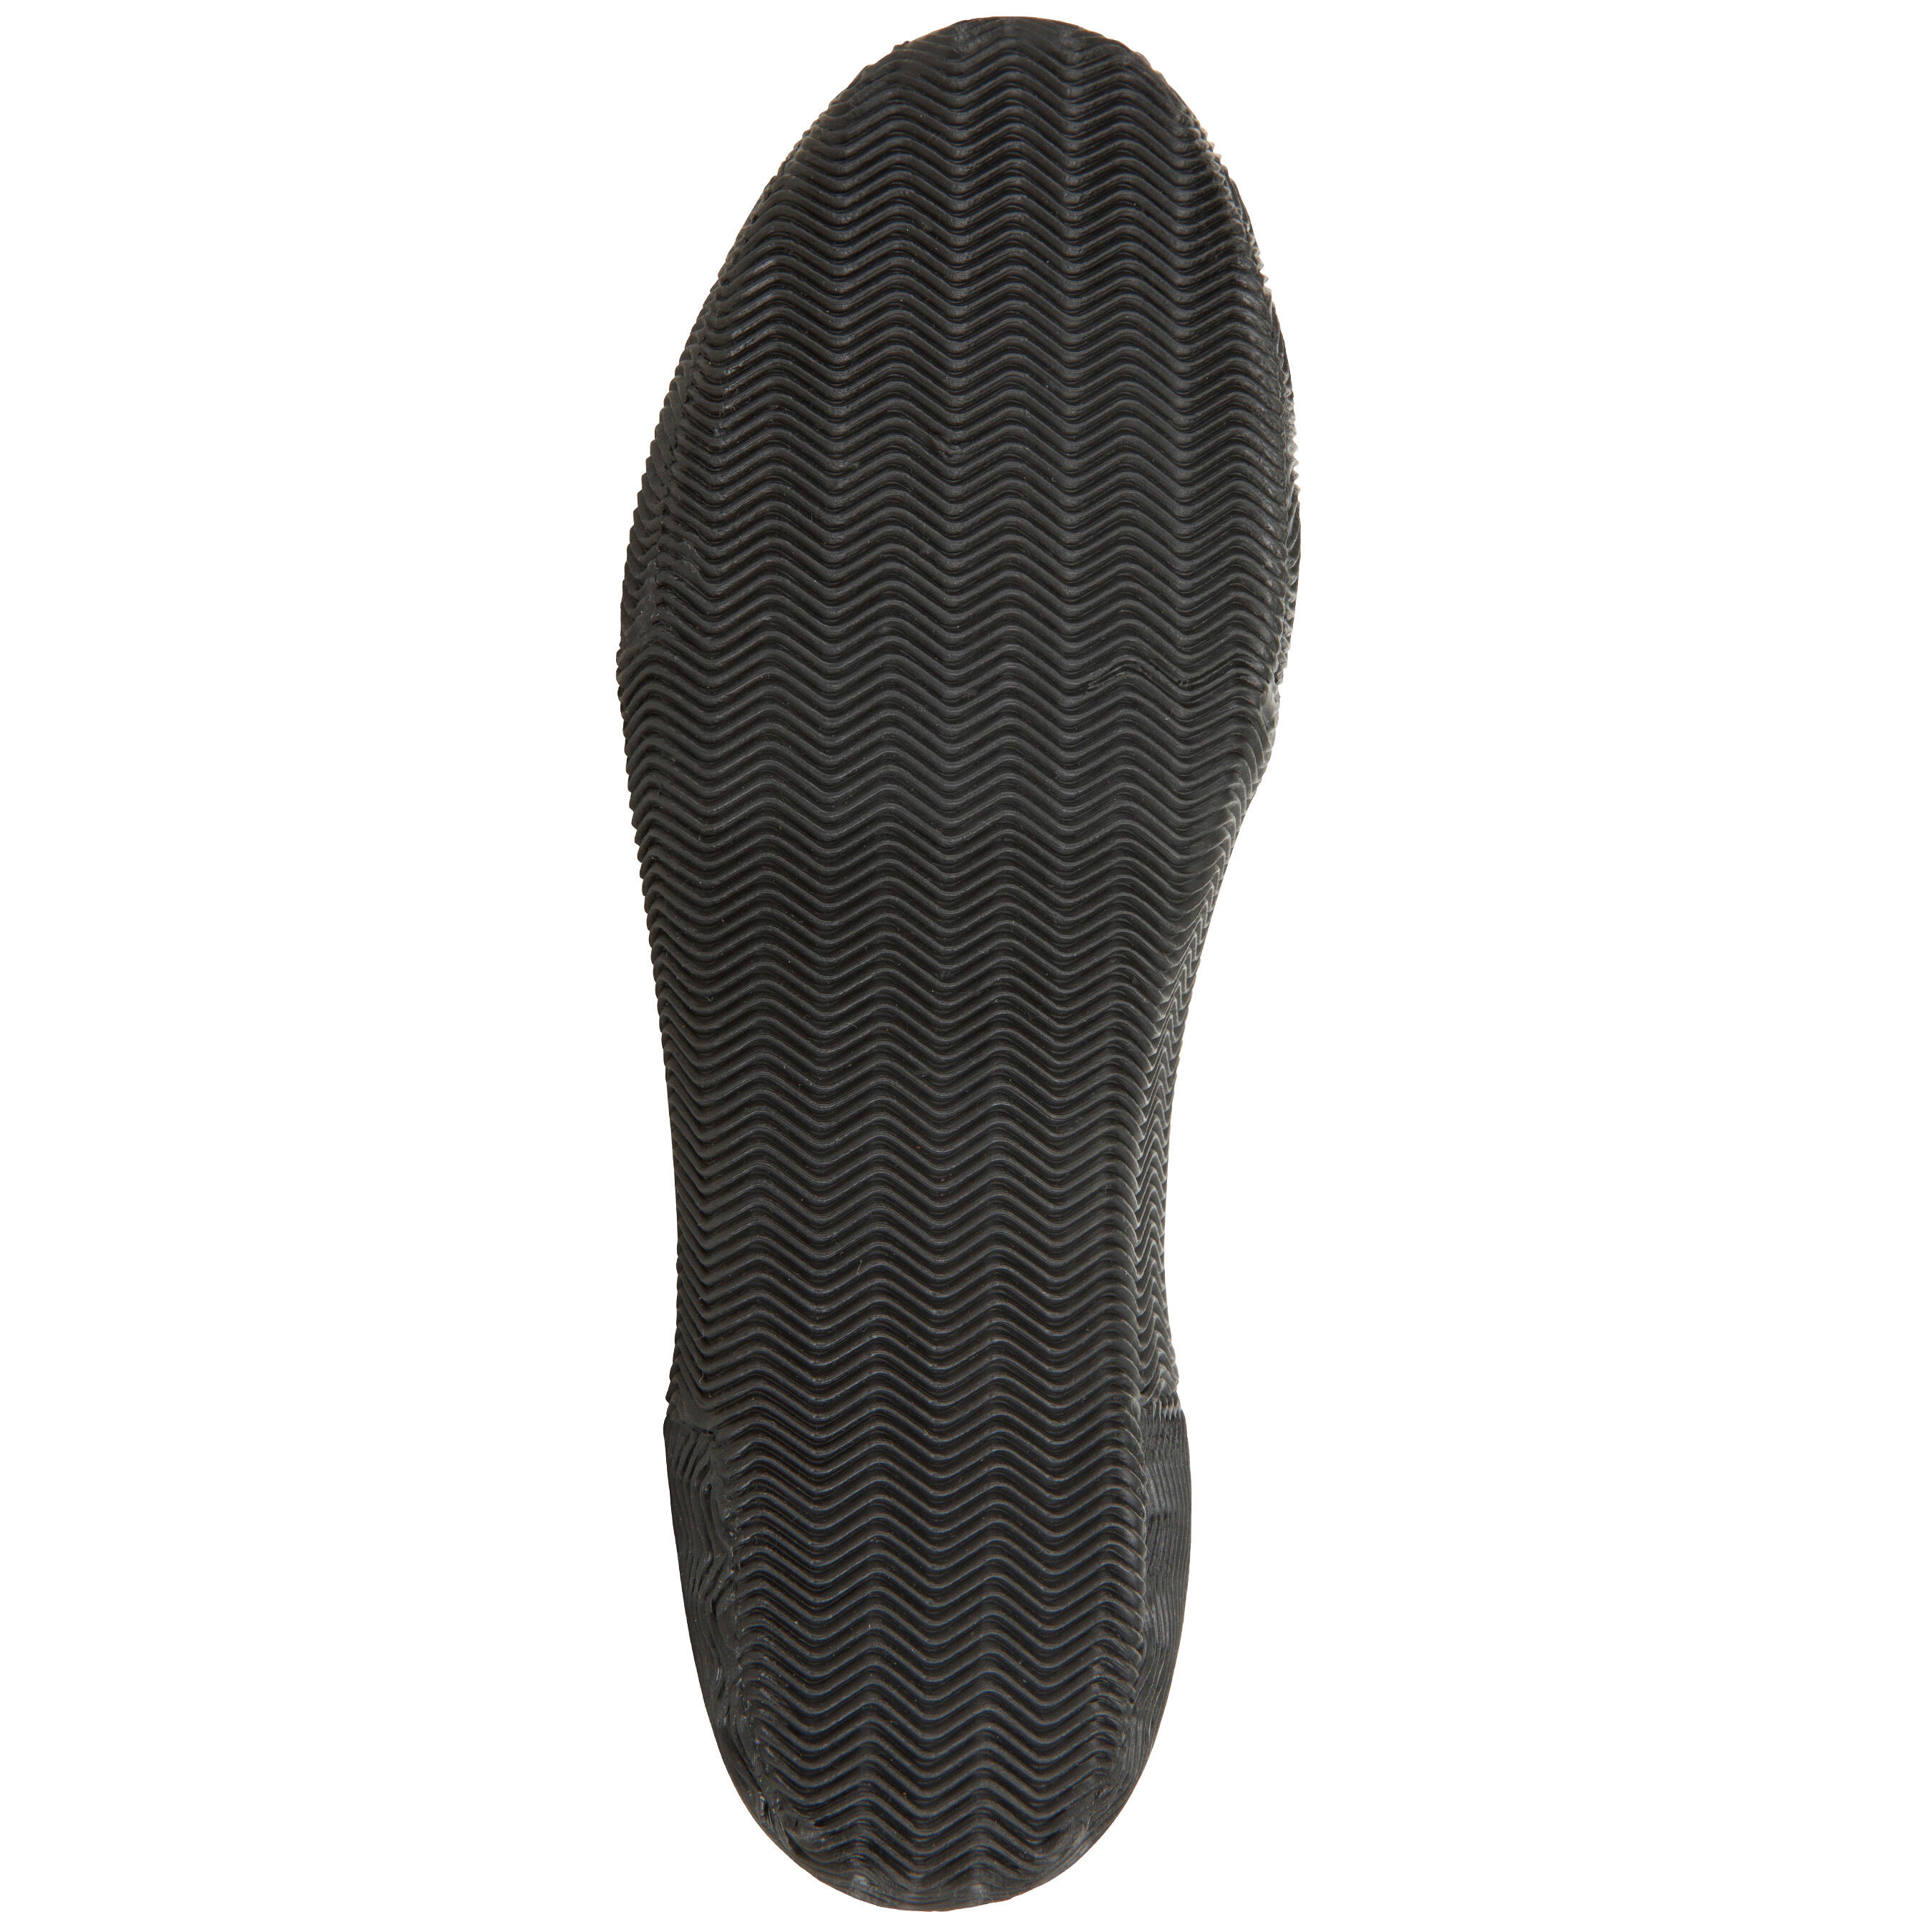 Kayak/SUP 1.5 mm Neoprene Shoes - ITIWIT